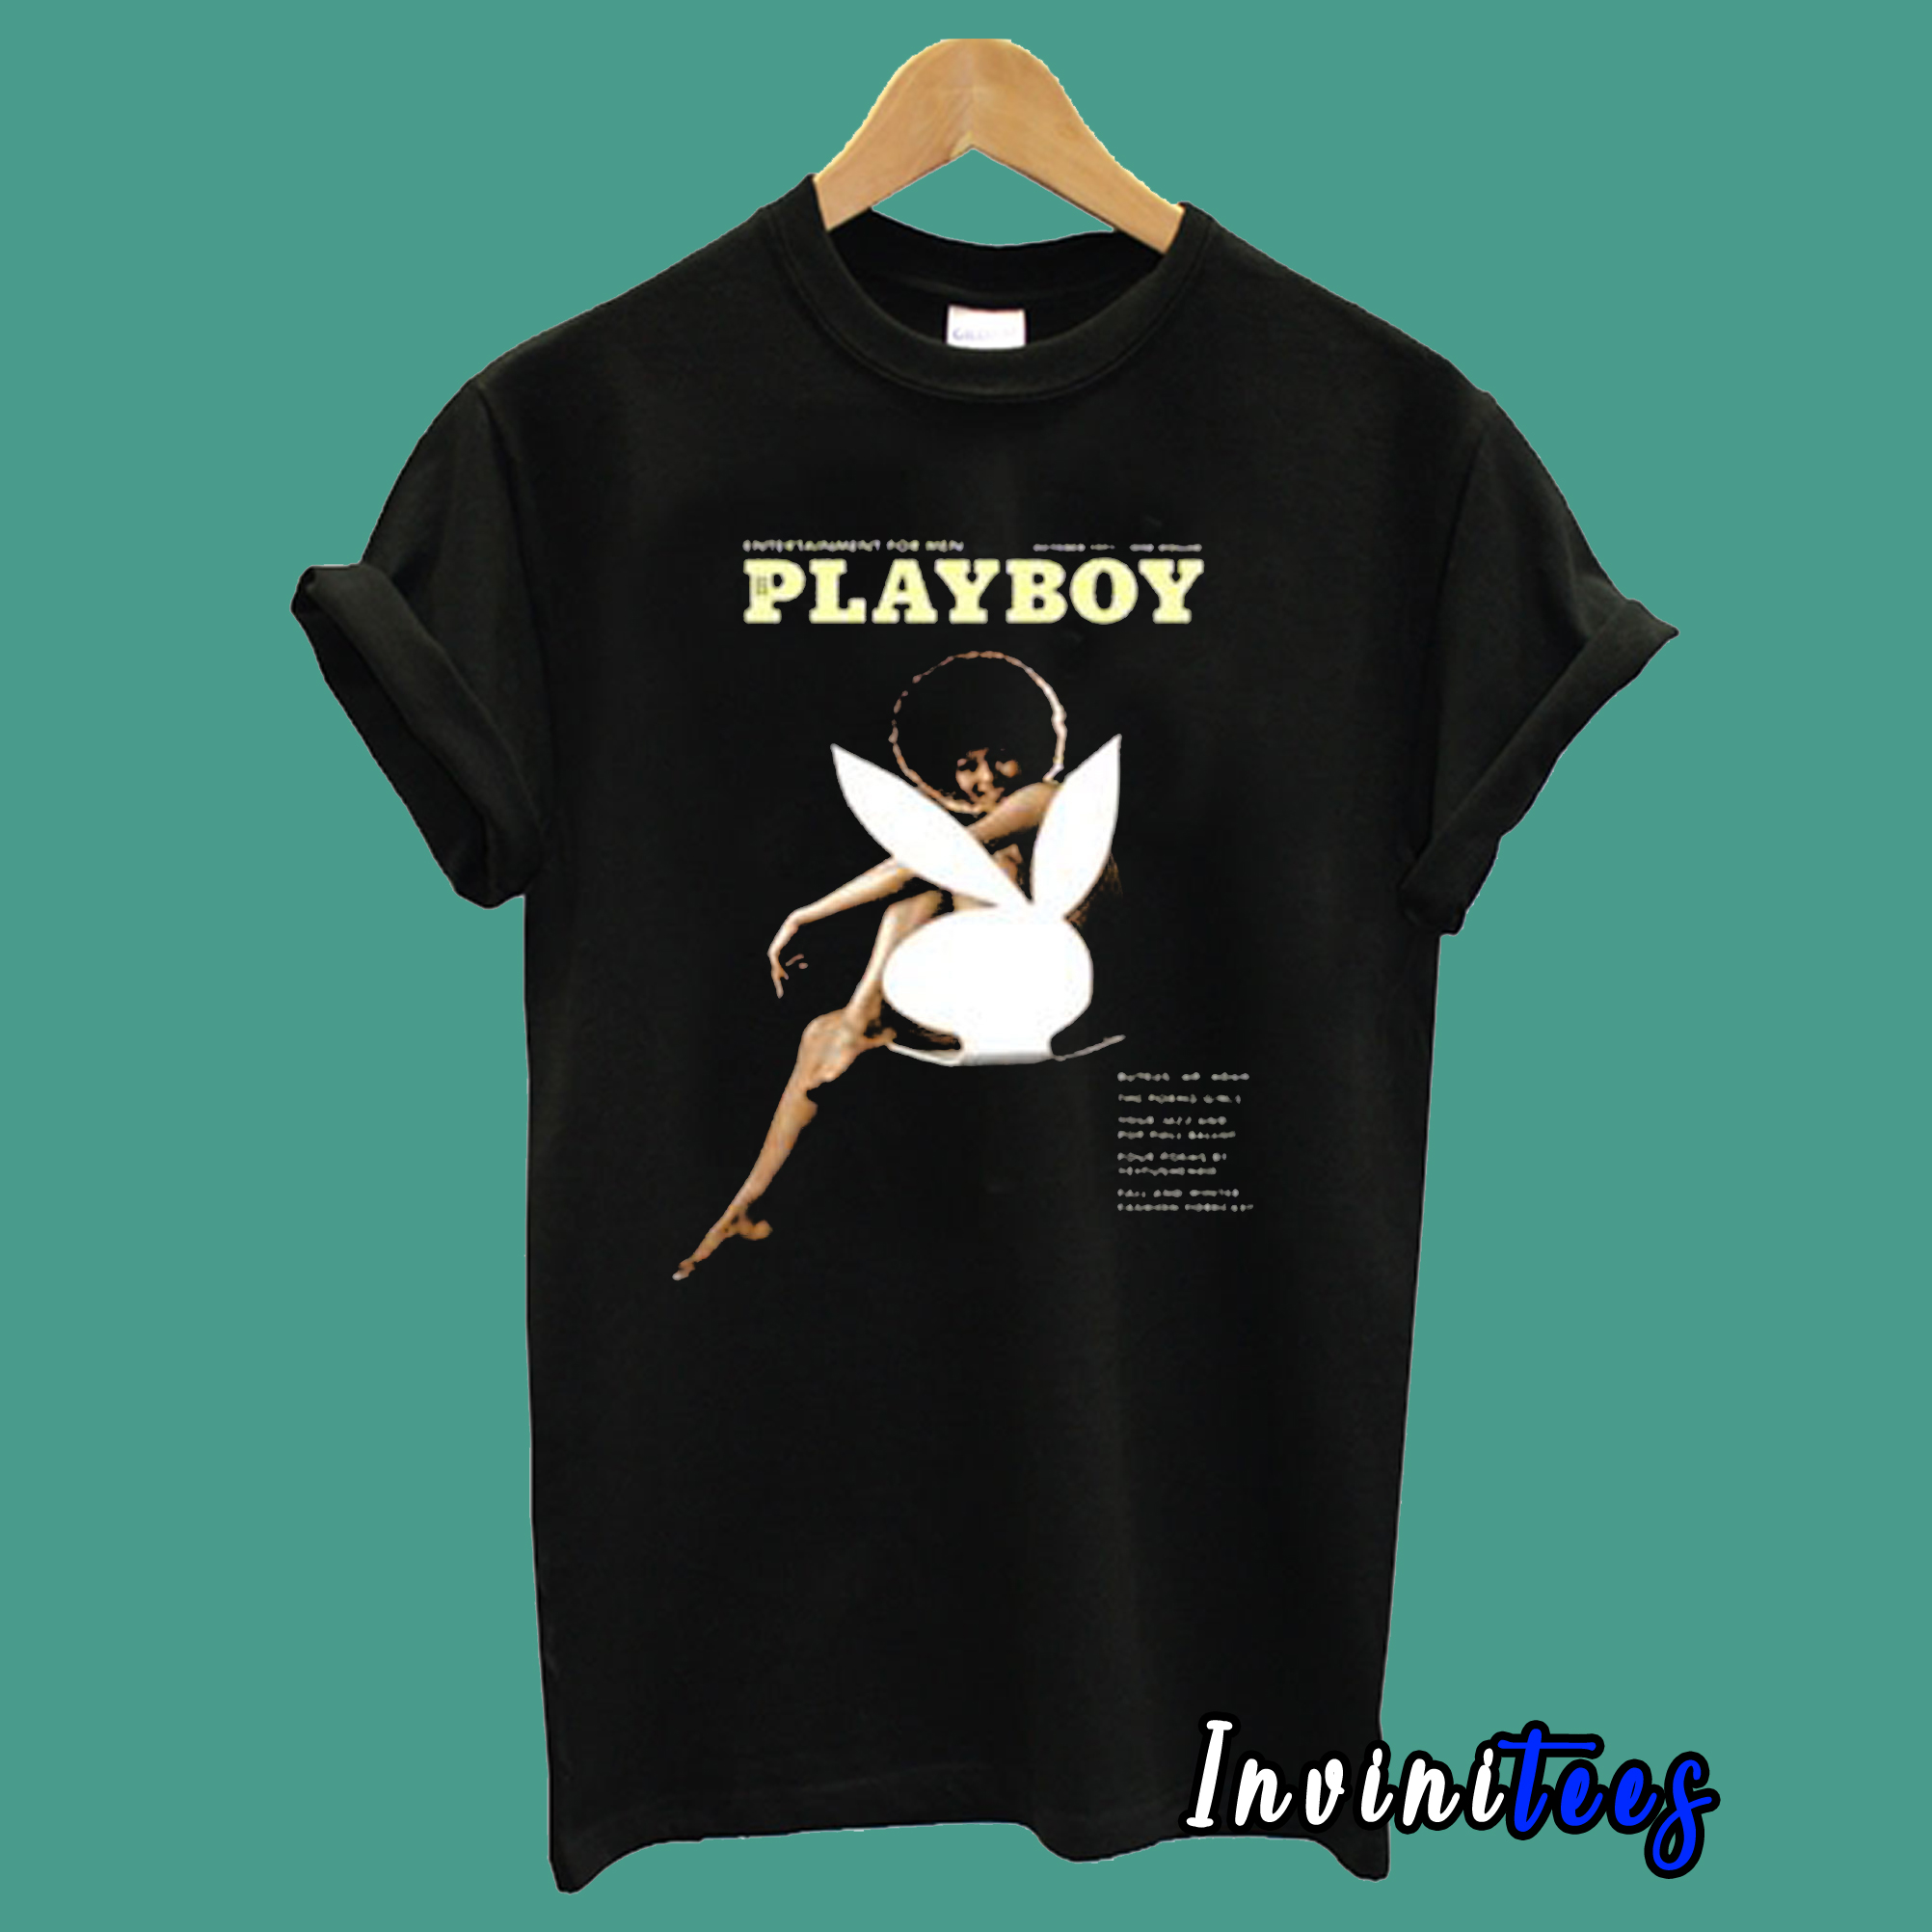 Entertainment Playboy Sportiqe October 1971 T shirt